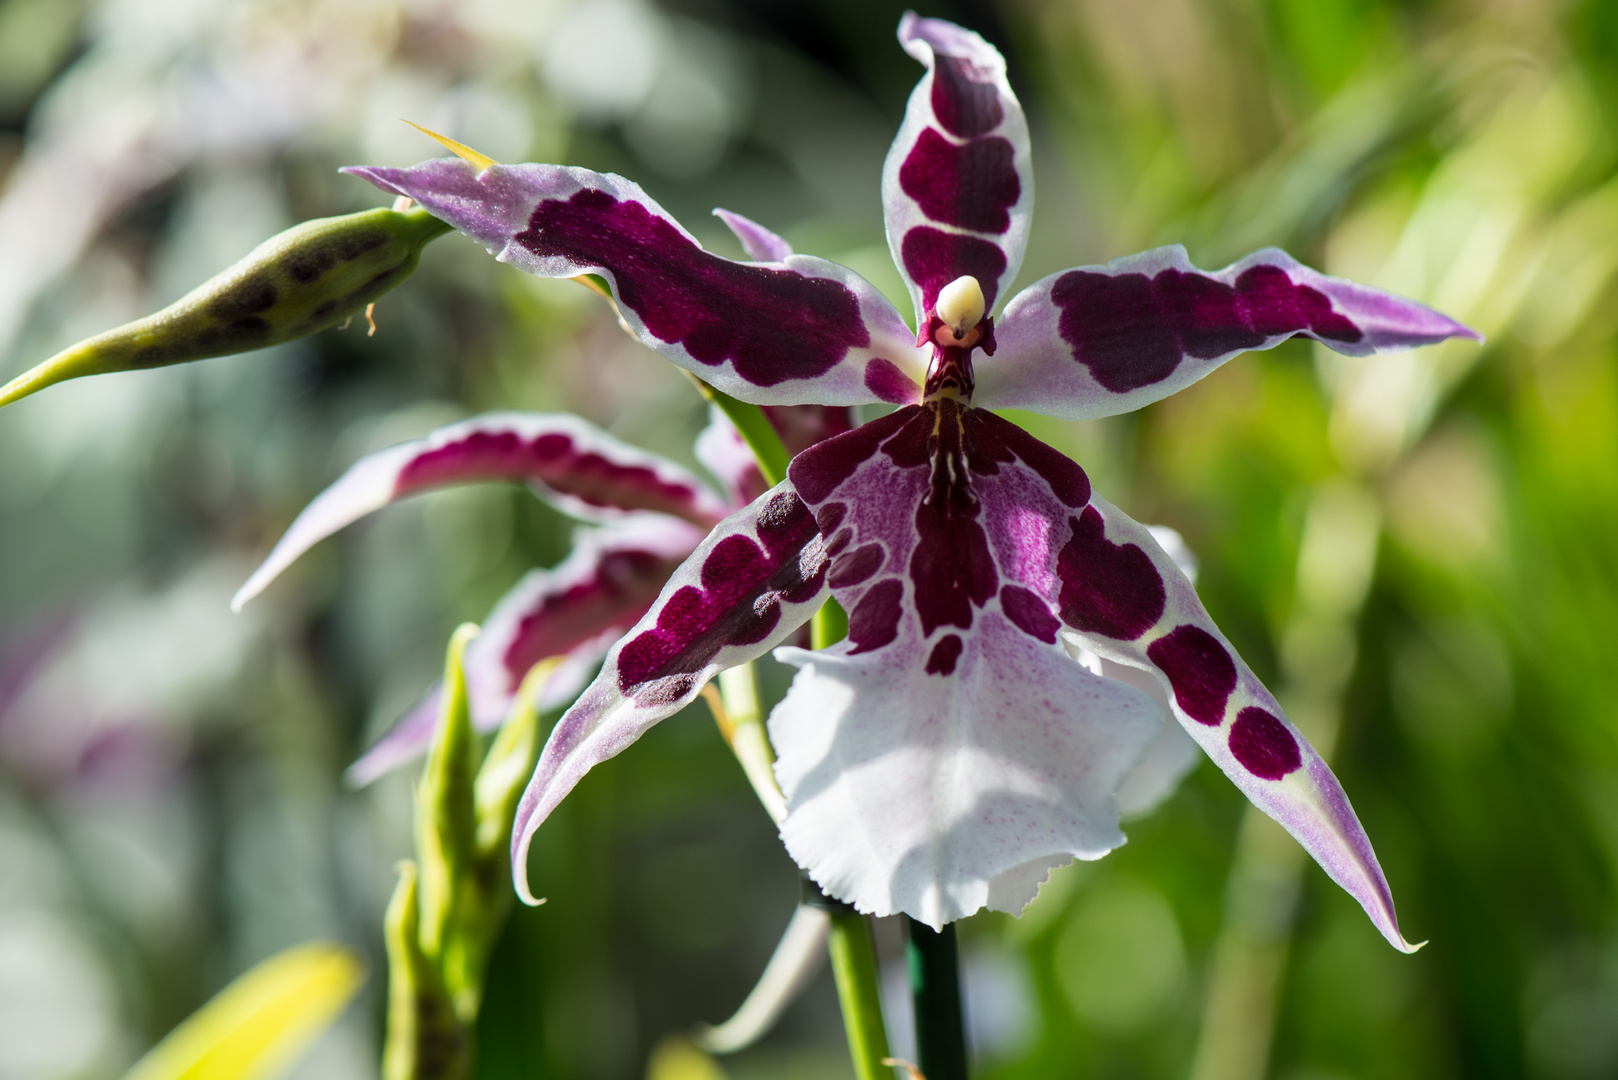 Orchidee 5